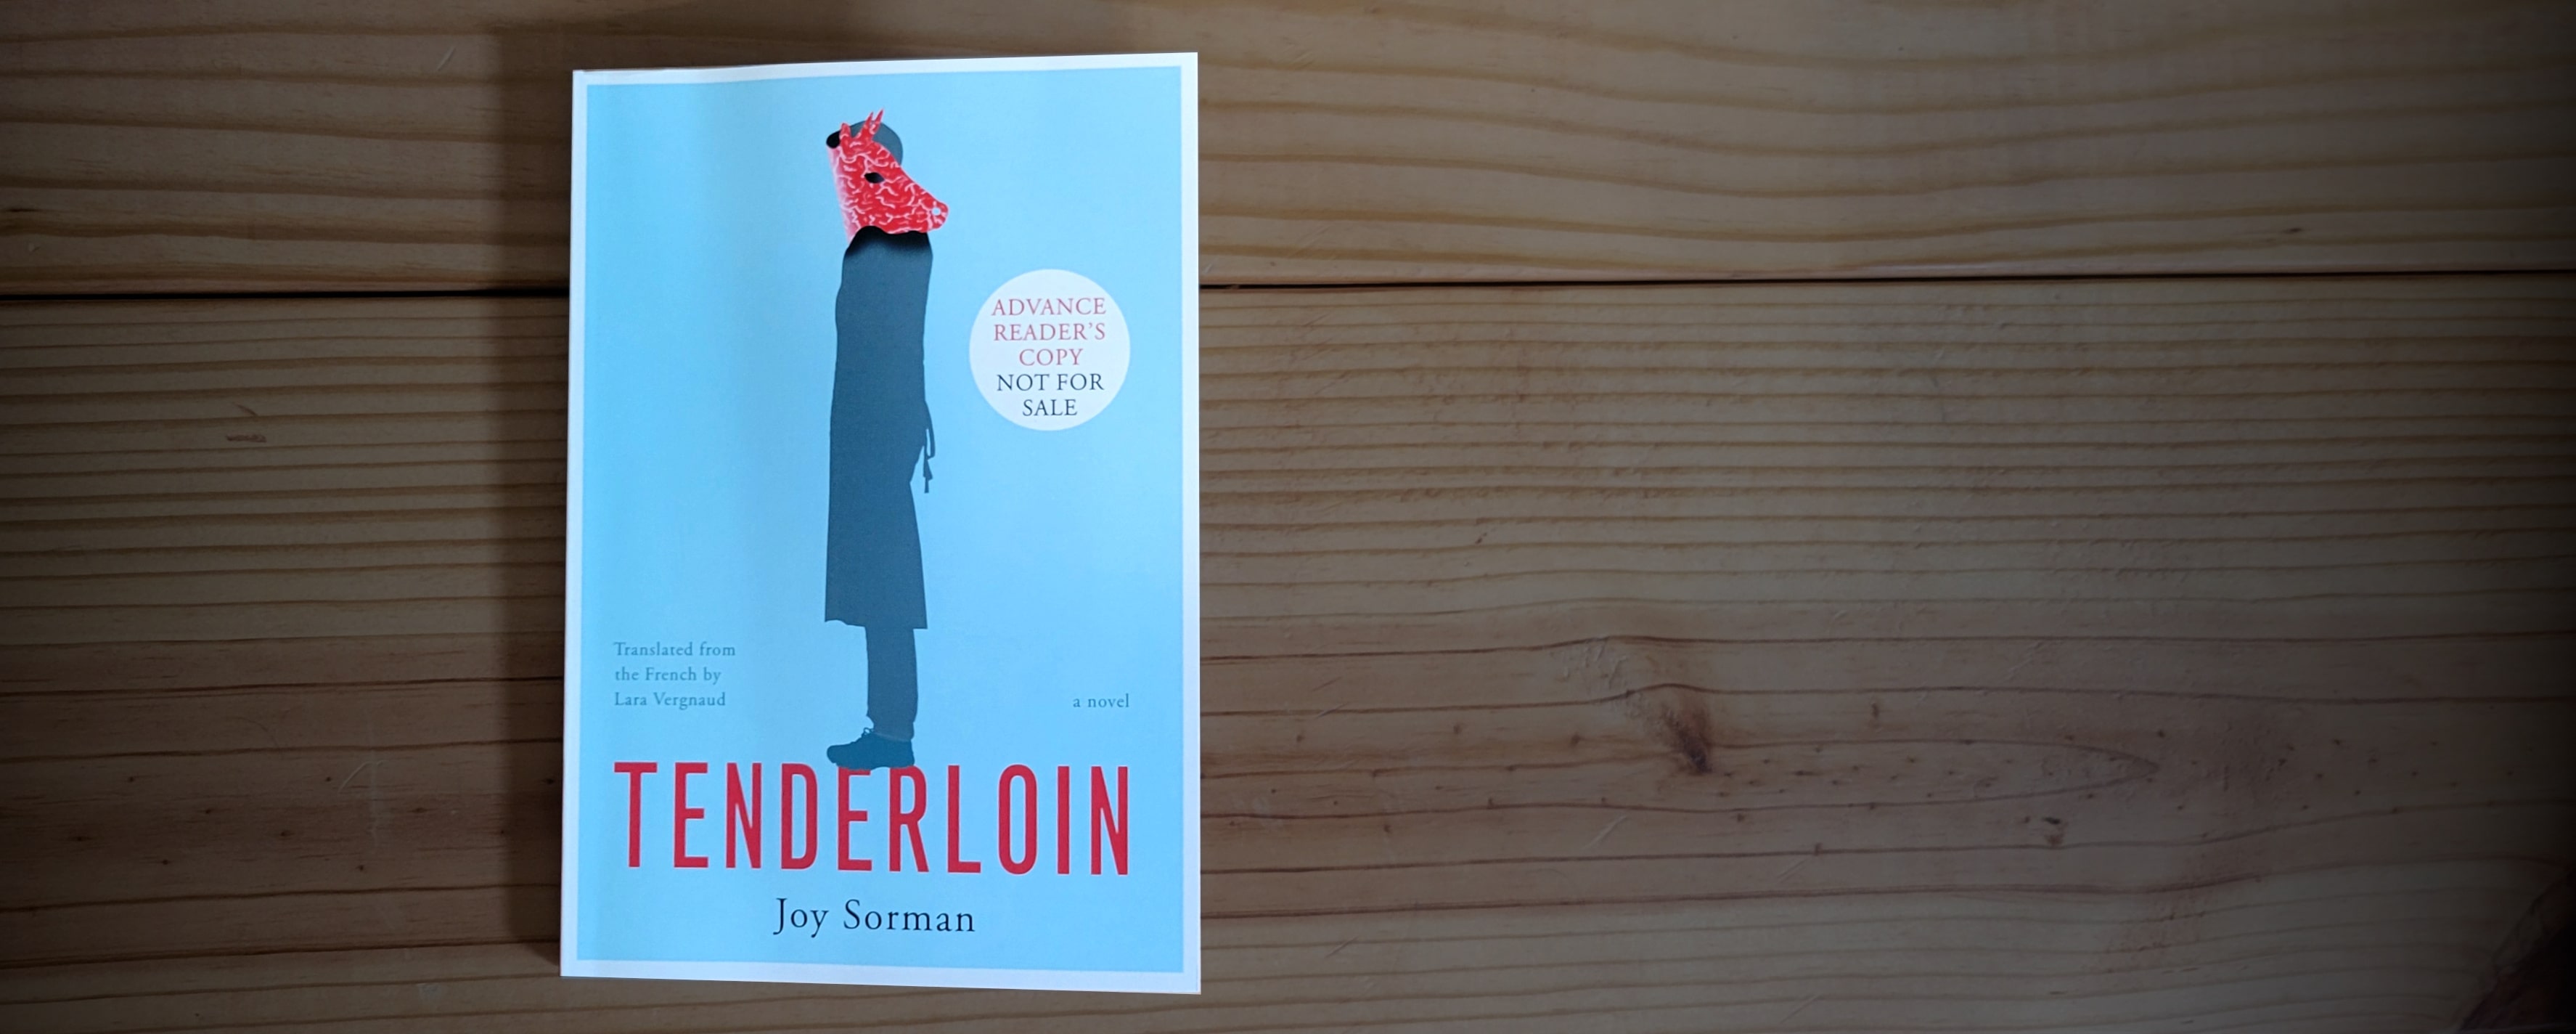 Book cover of Tenderloin by Joy Sorman